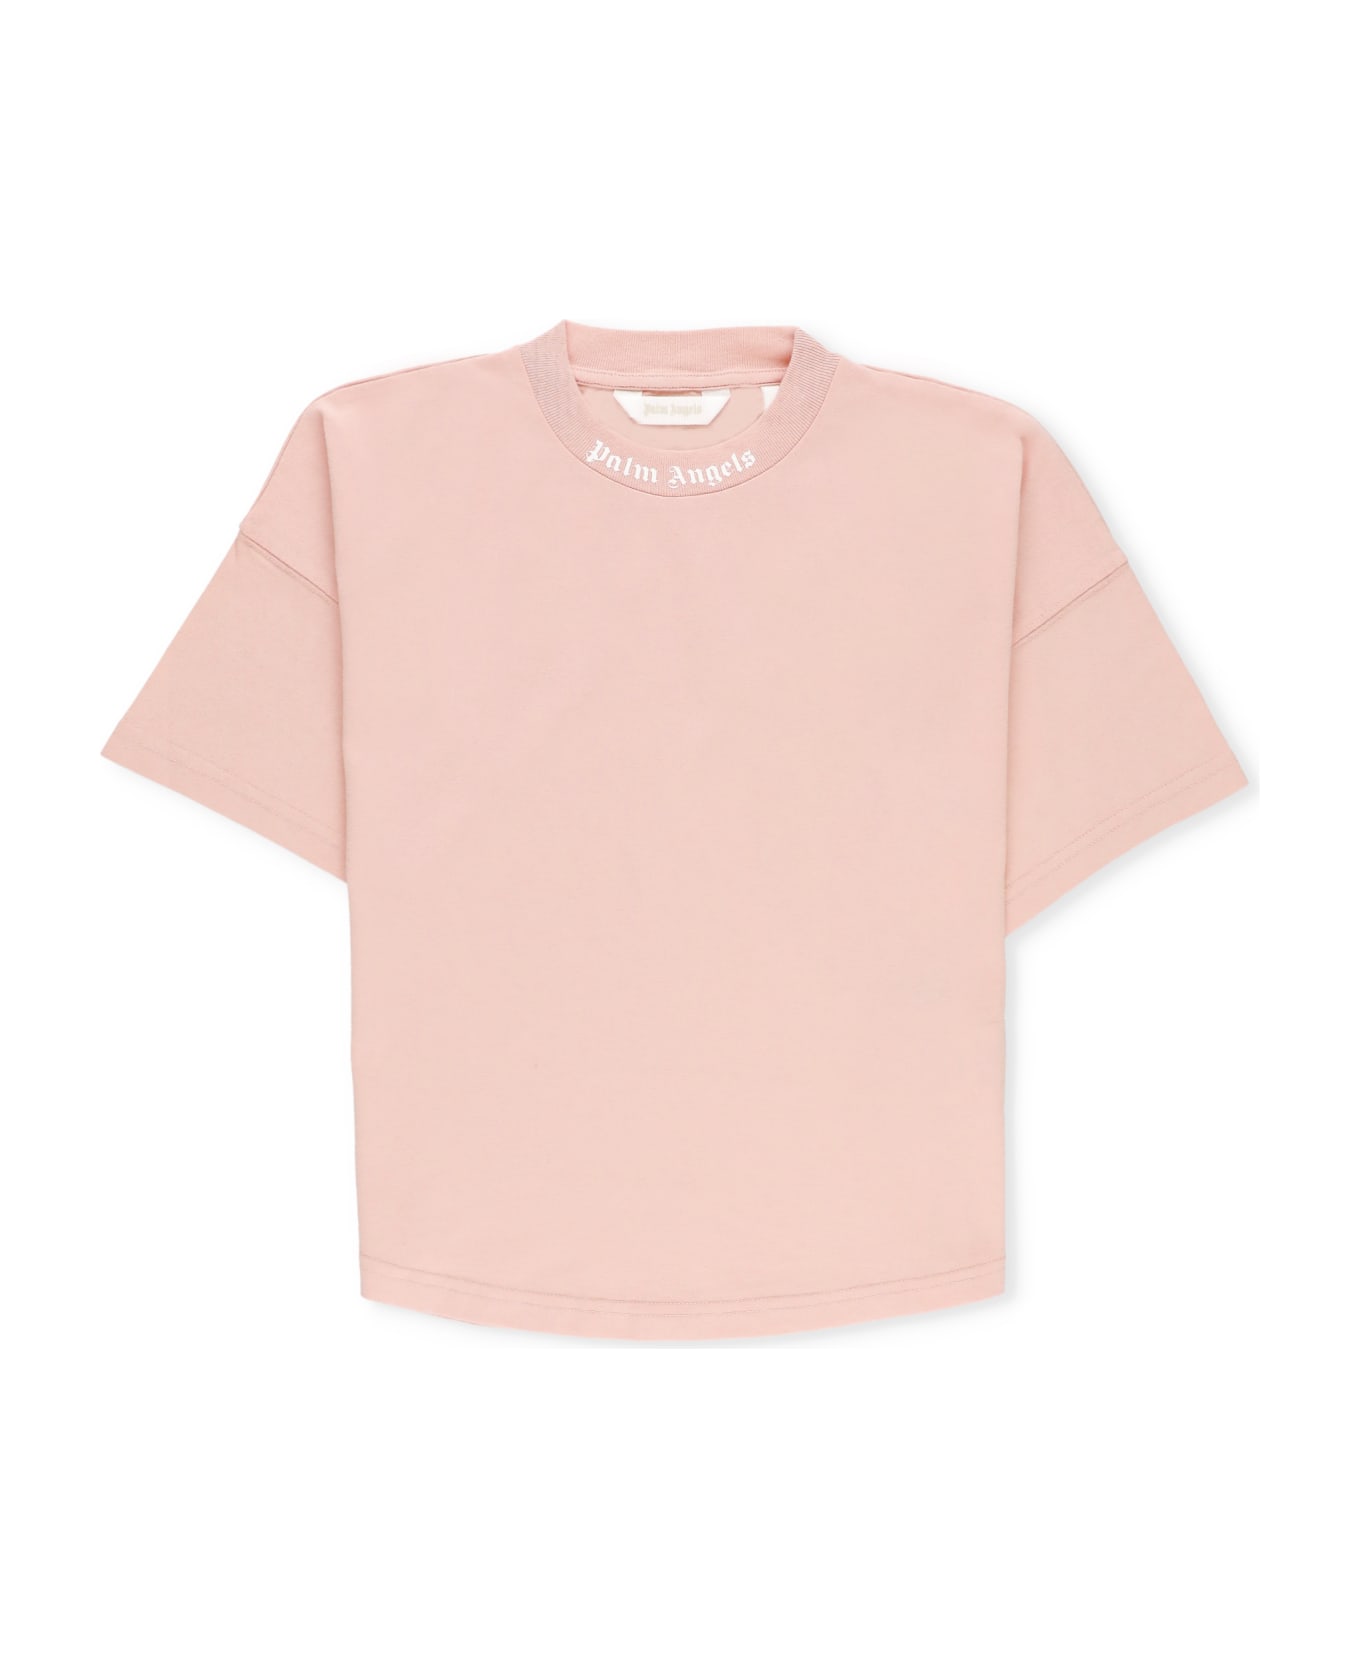 Palm Angels Overlogo T-shirt - Pink